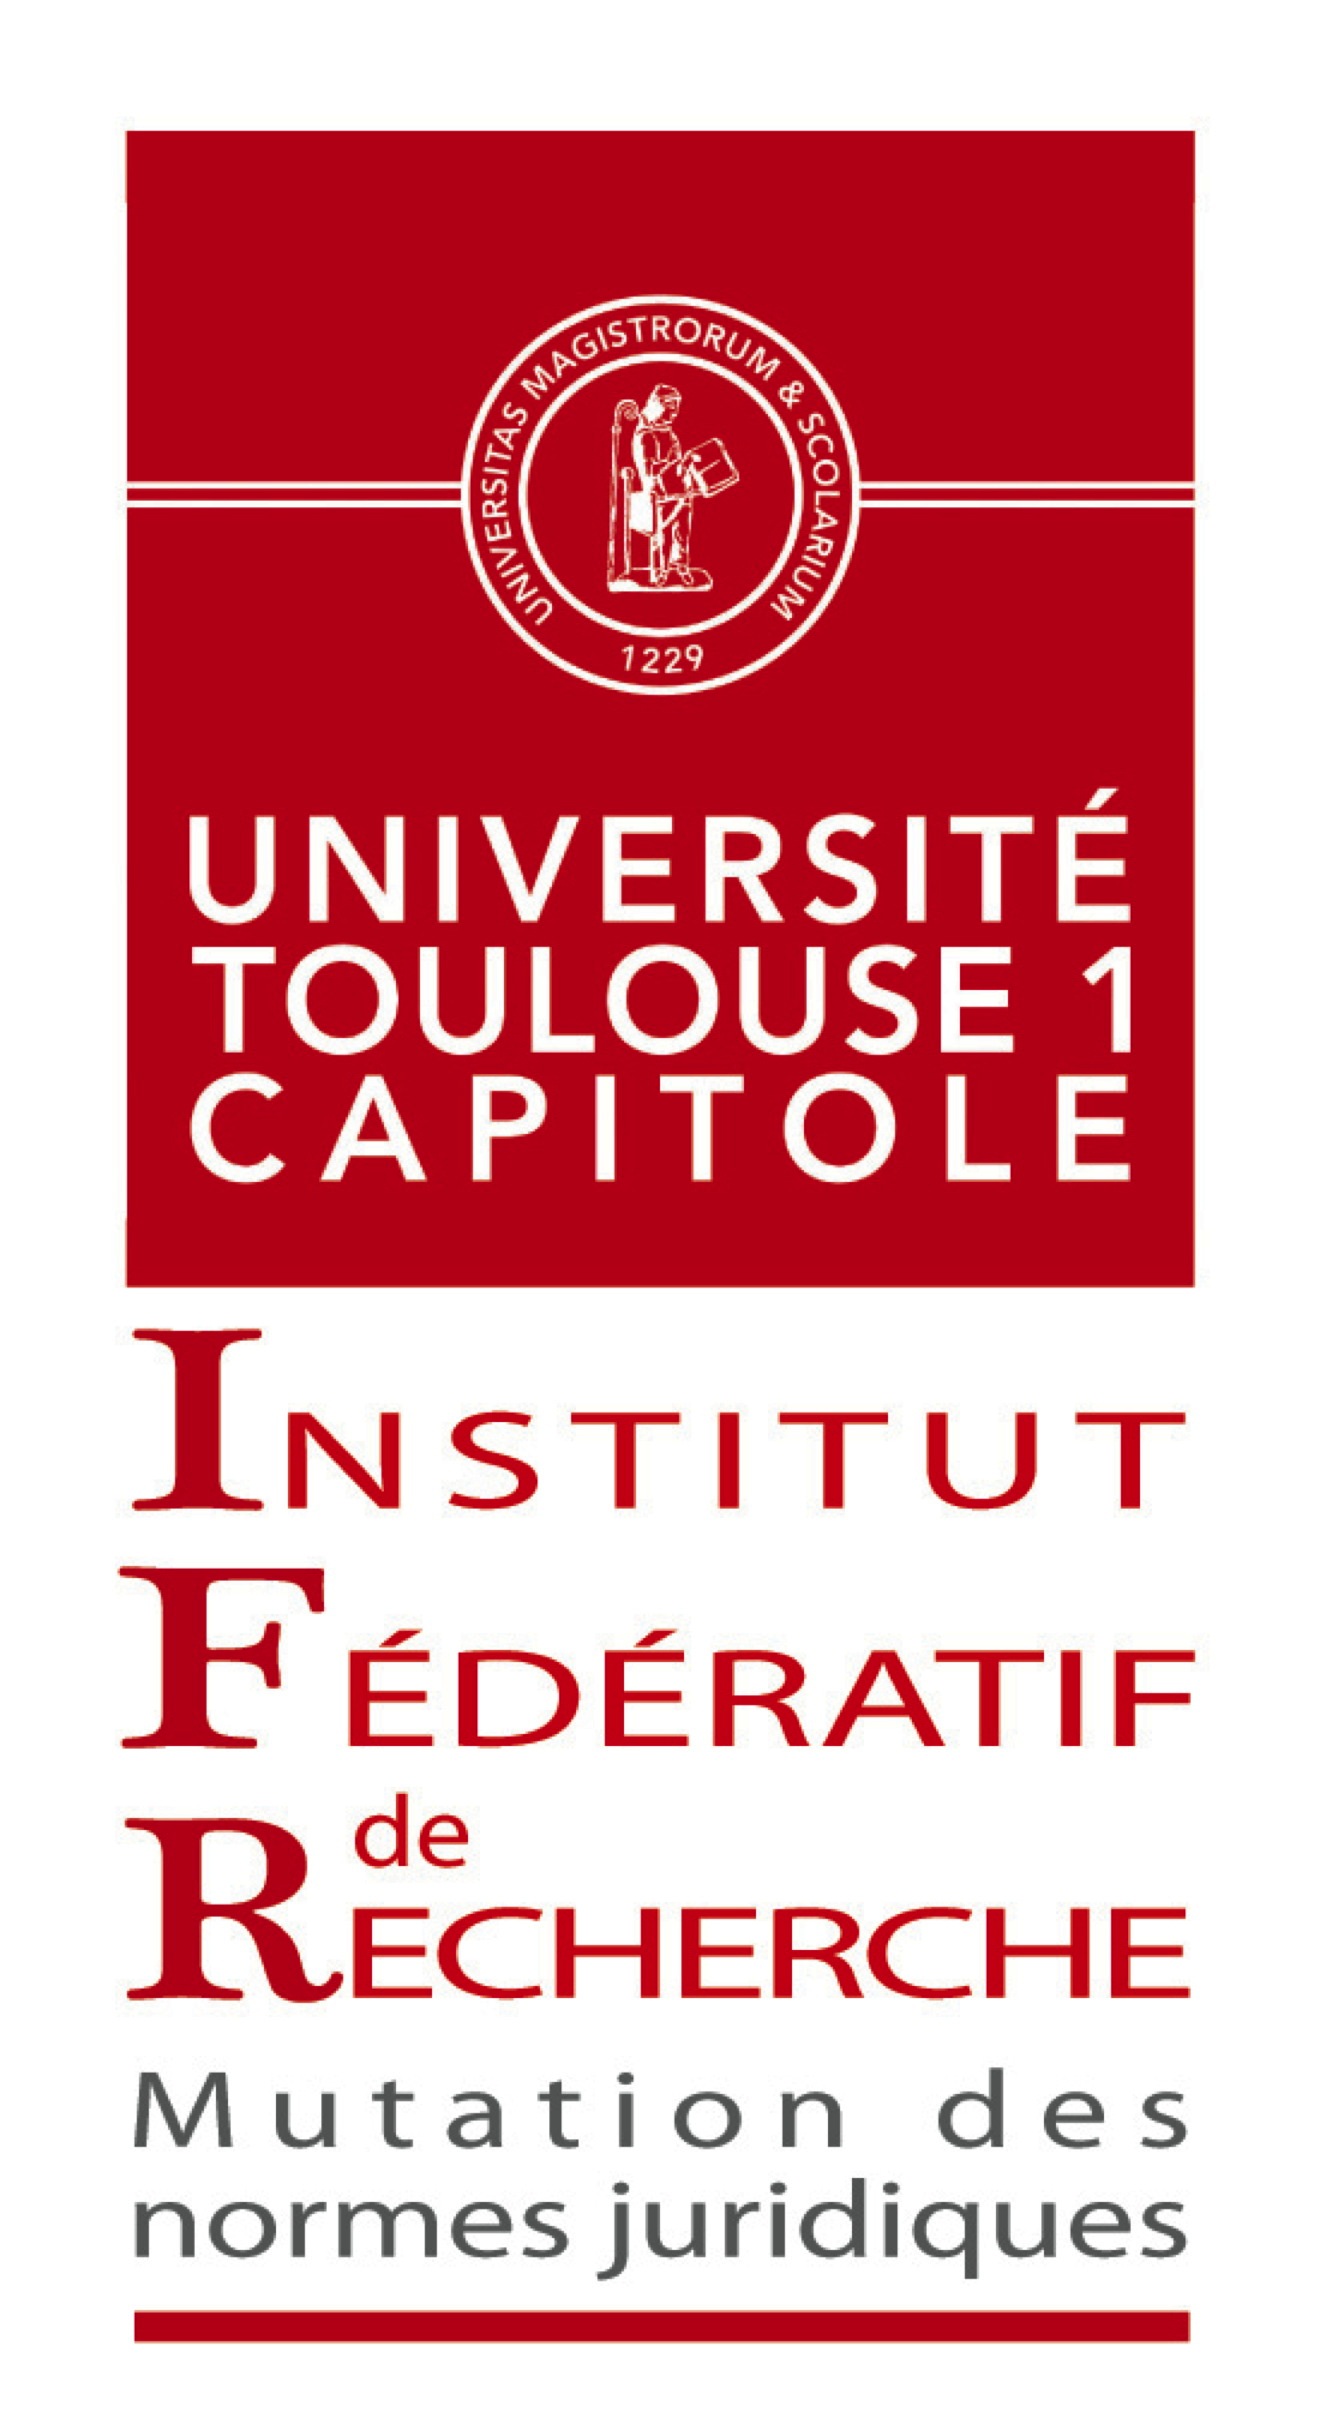 logo ifr